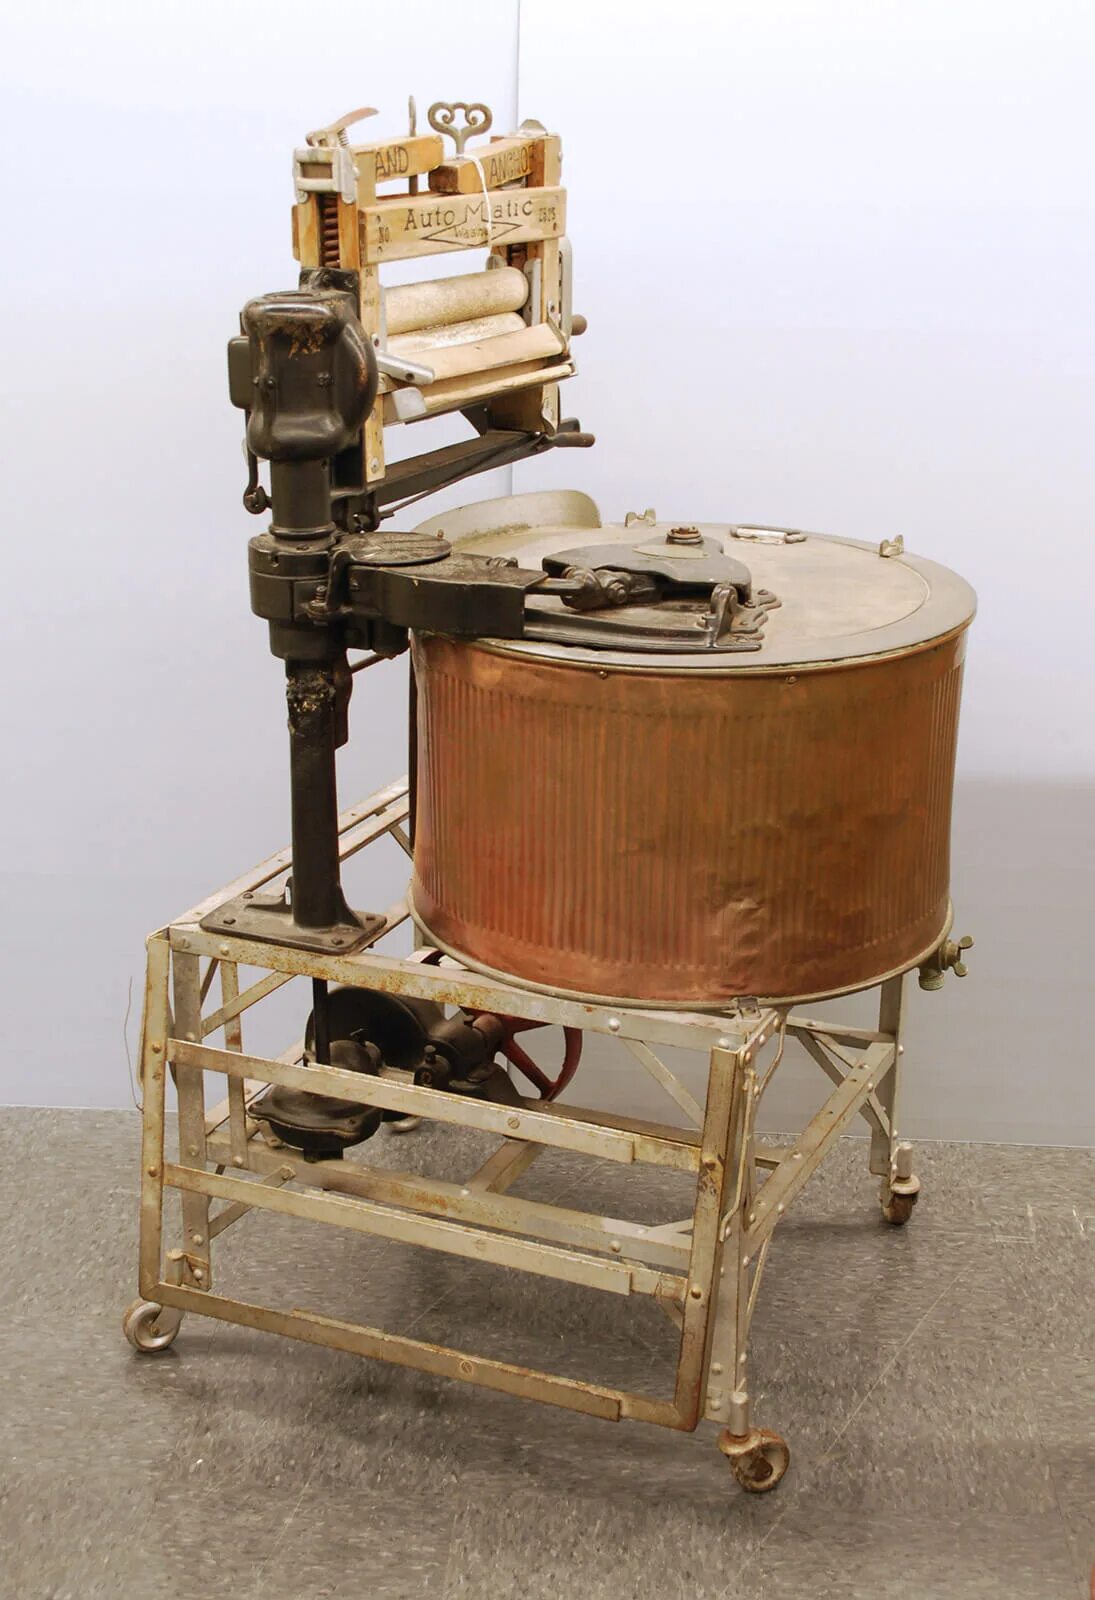 Первая стиральная машина автомат. Первая стиральная машина Уильяма Блэкстоуна. Уильям Блэкстоун стиральная машина. Первая стиральная машина Алва Фишер.